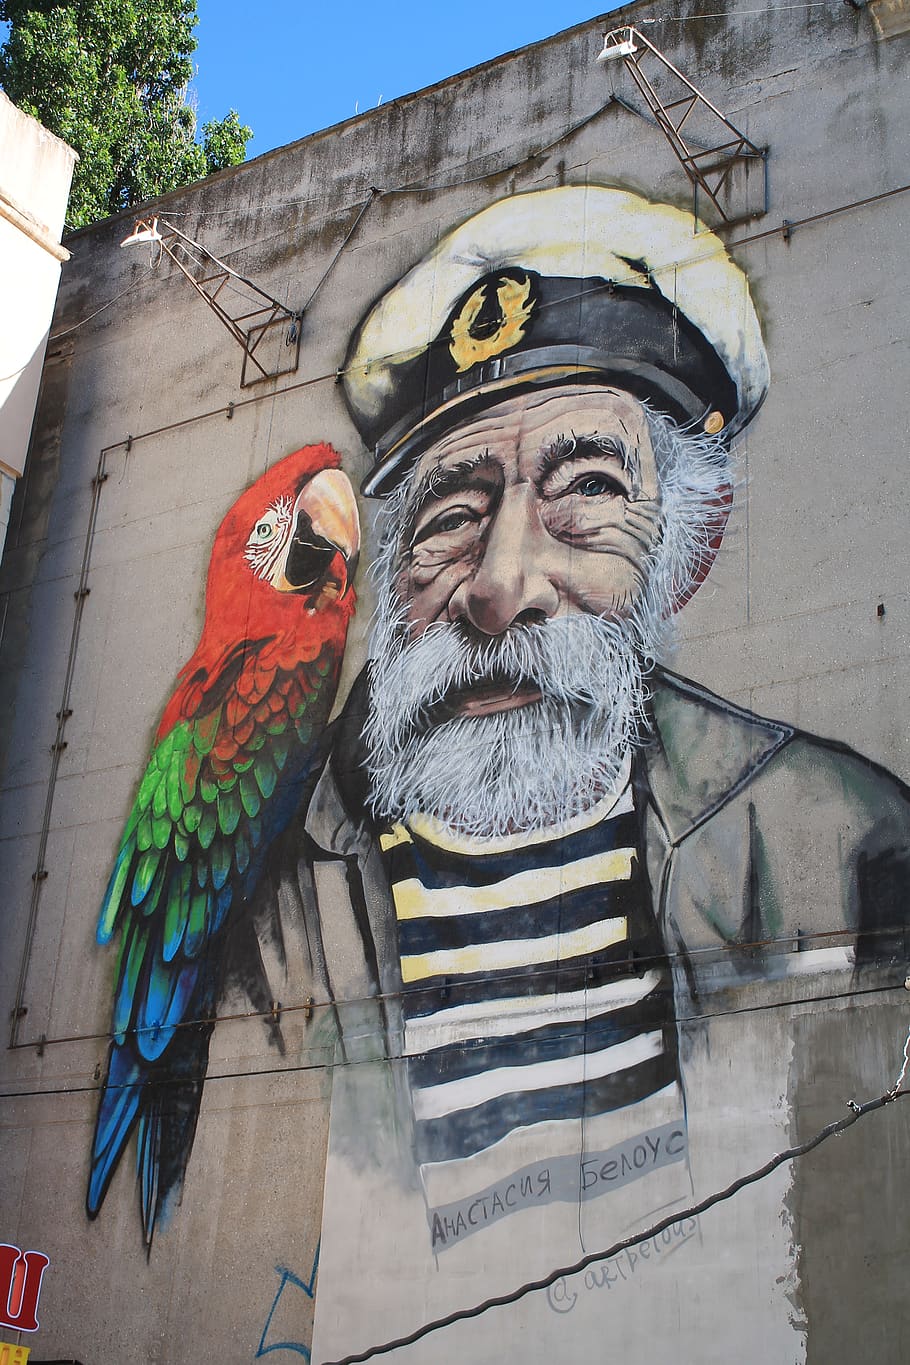 graffiti, salt, sailor, parrot, ukraine, odessa, day, art and craft, creativity, representation